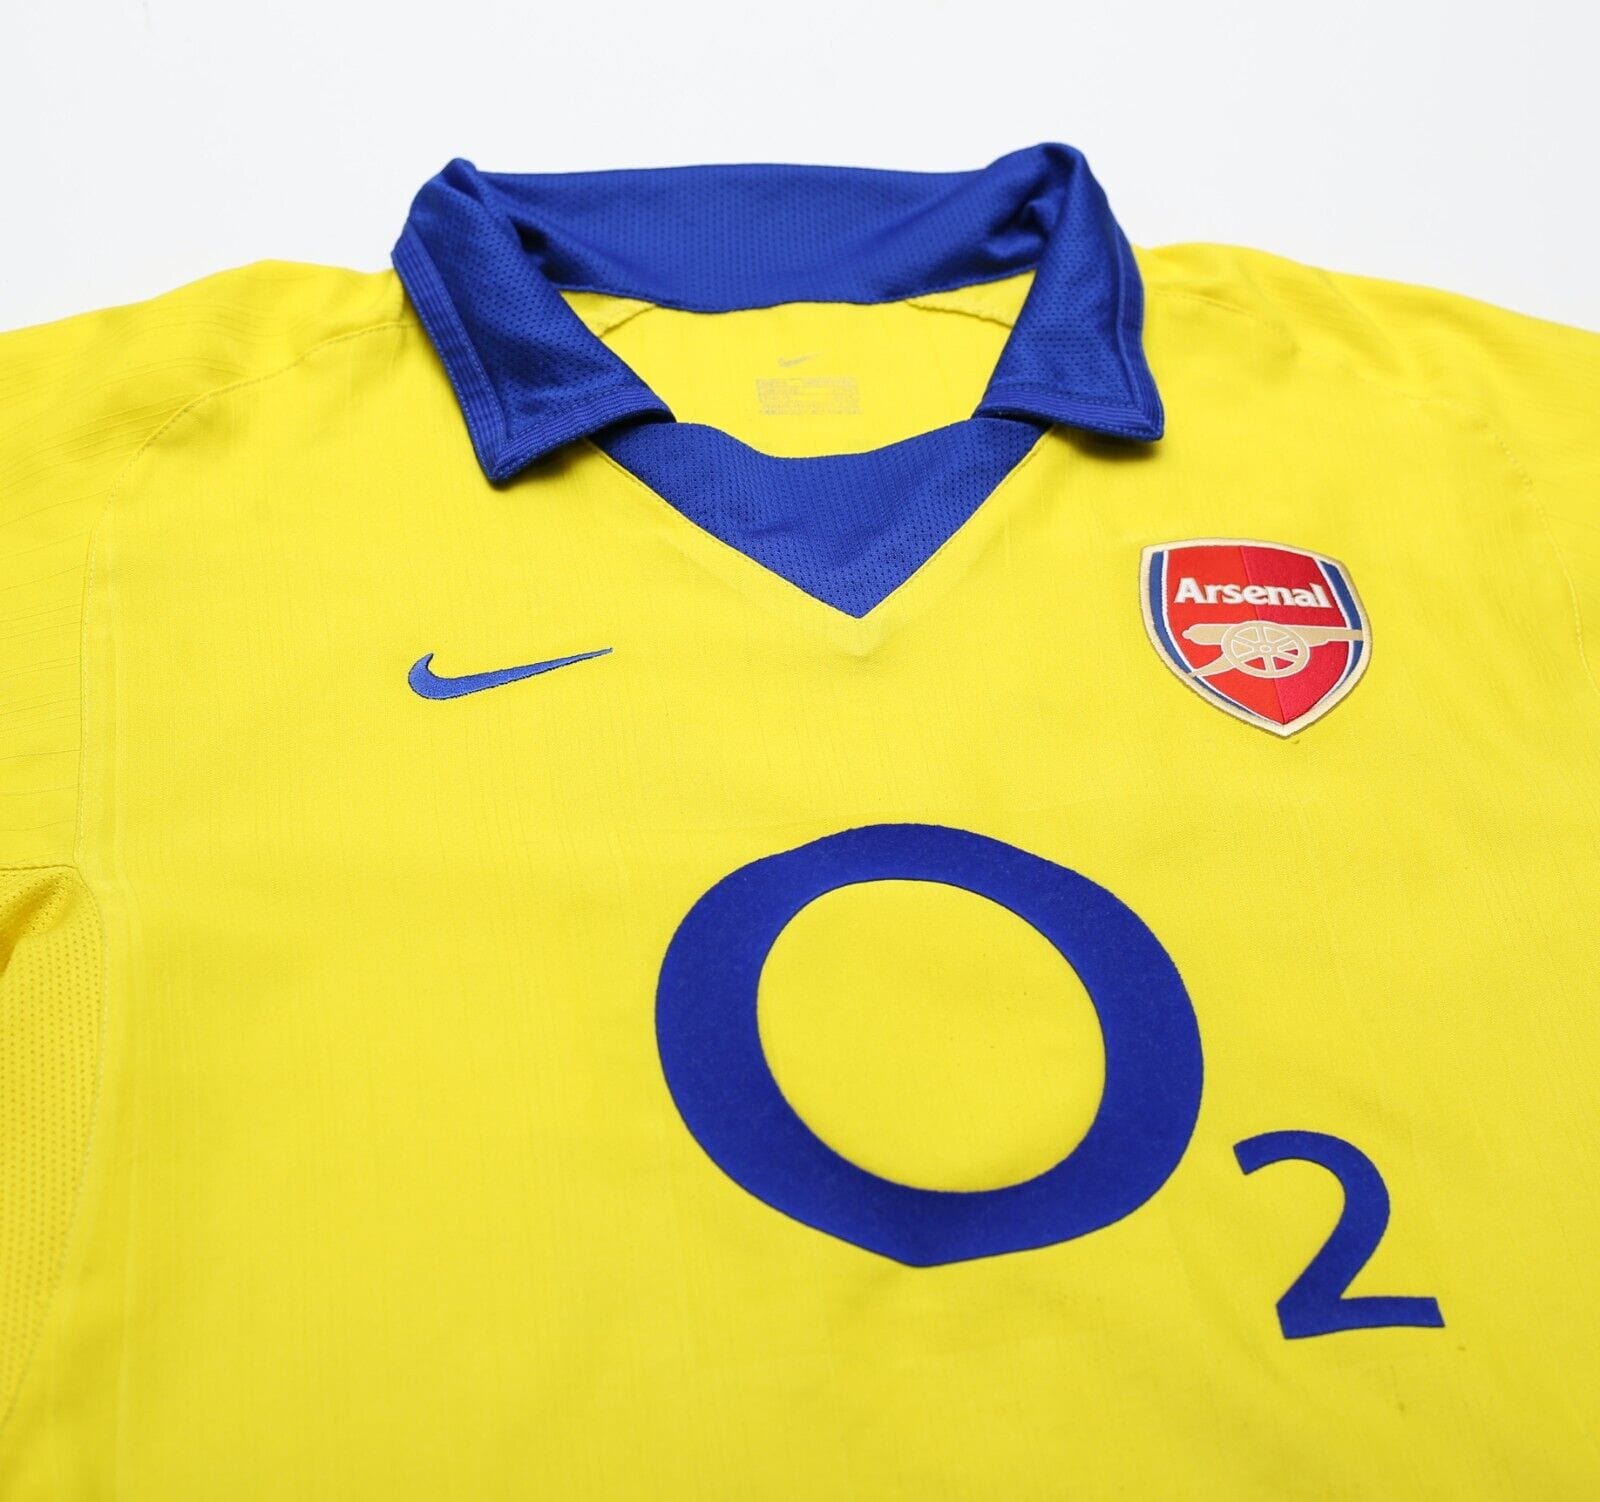 Vintage Arsenal football shirts - Football Shirt Collective